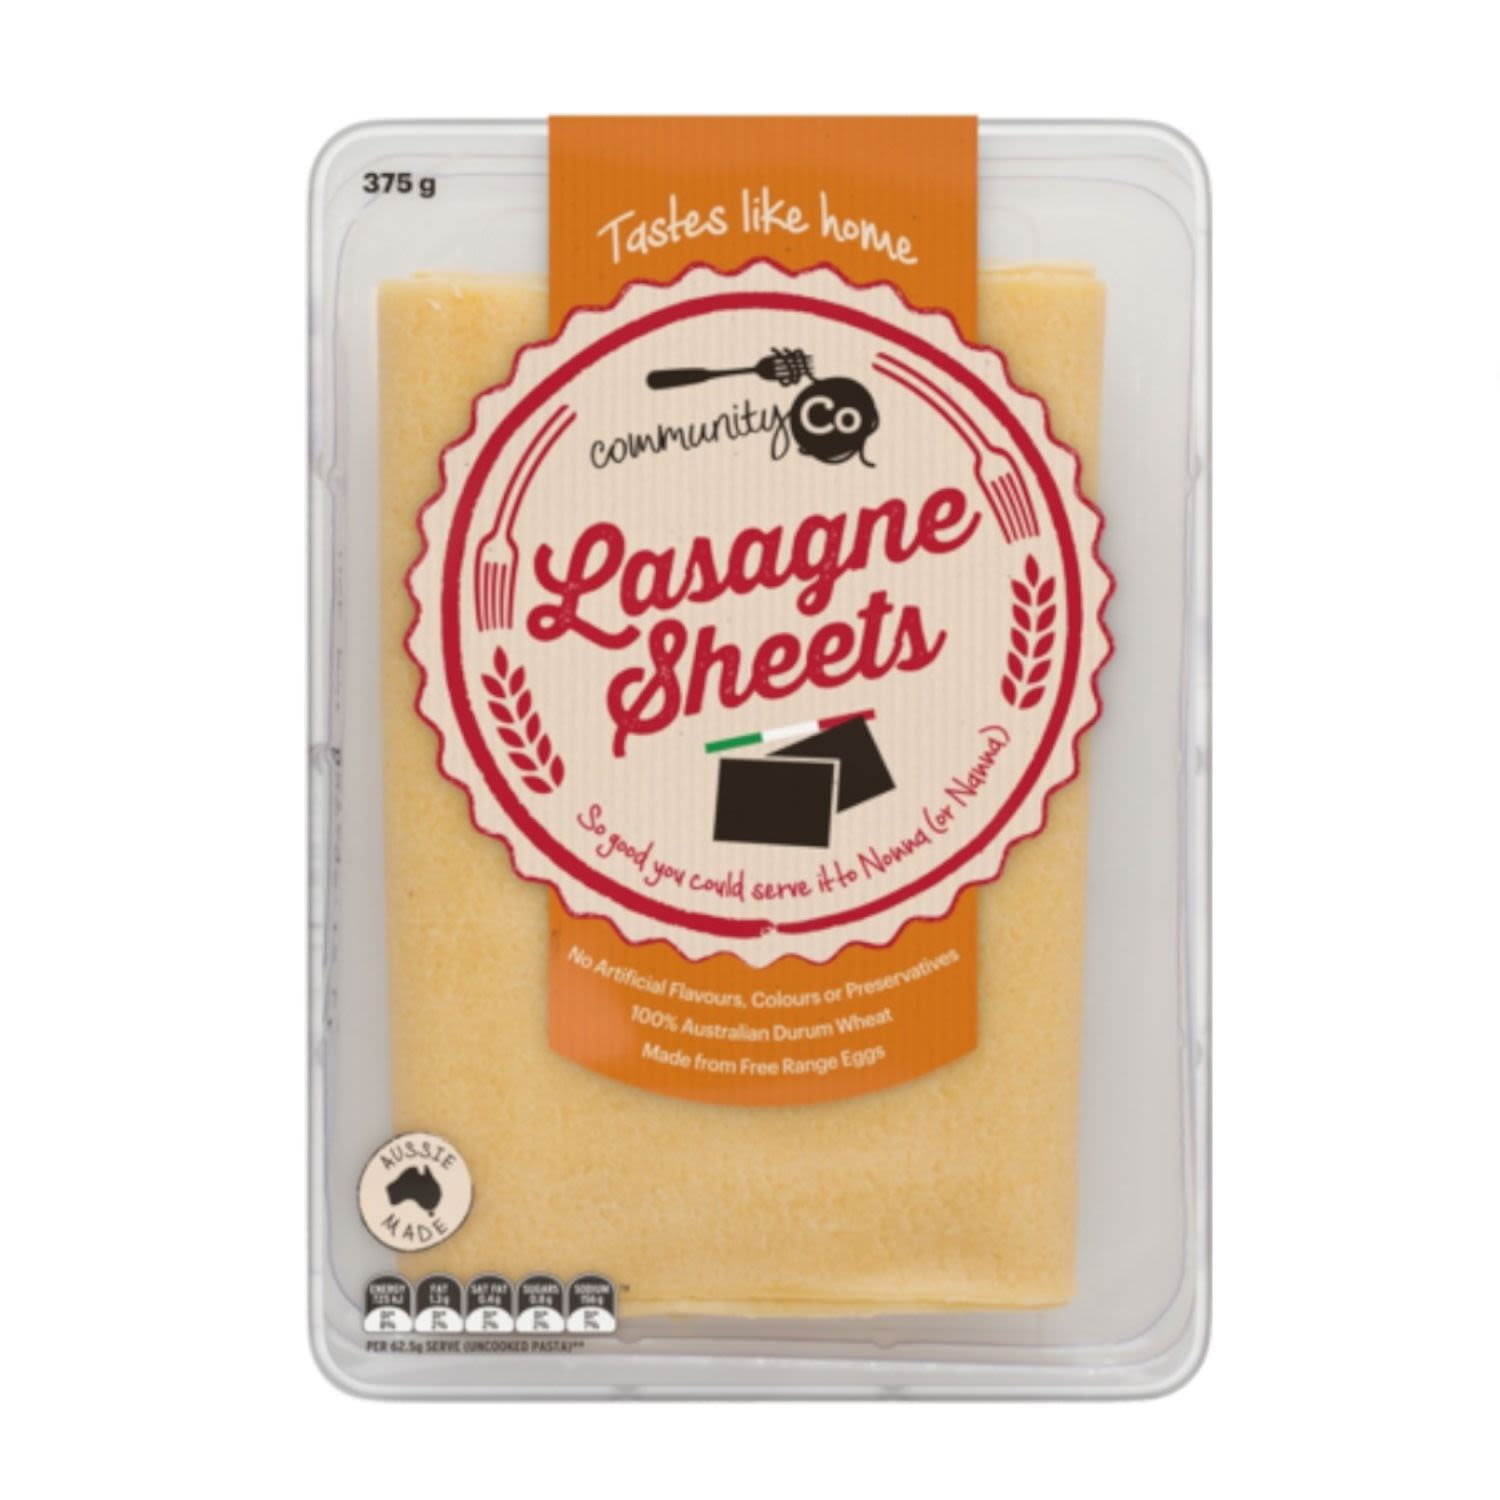 Community Co Fresh Lasagne Sheets, 375 Gram